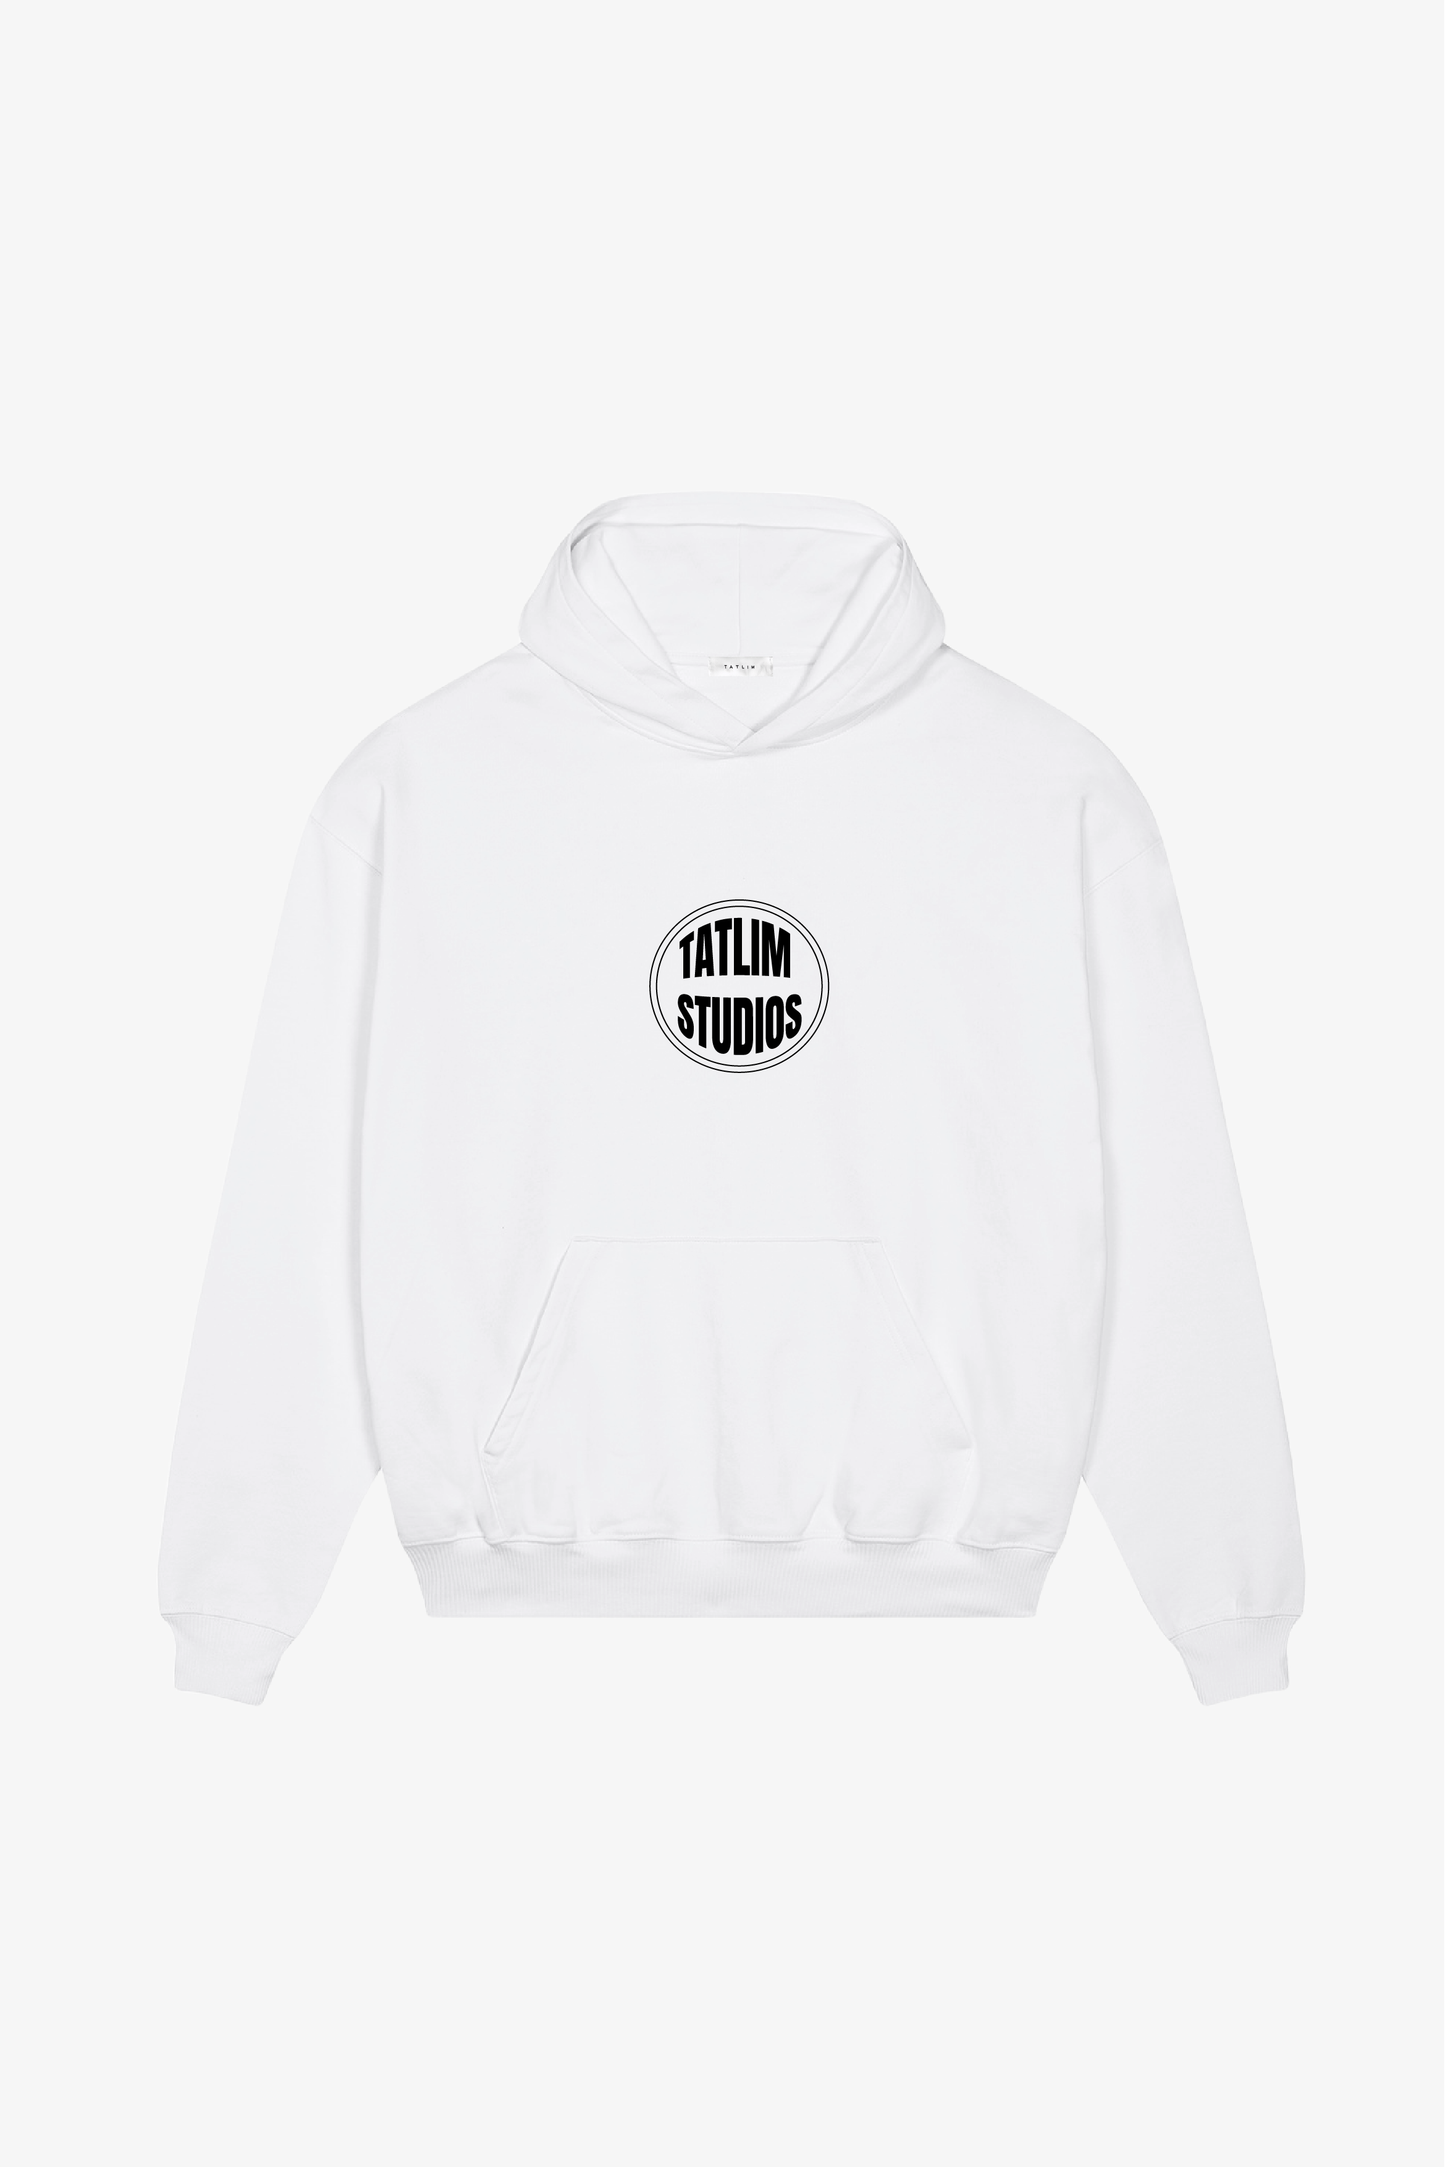 White Tatlim Studios Circle Oversized Hooded Sweatshirt